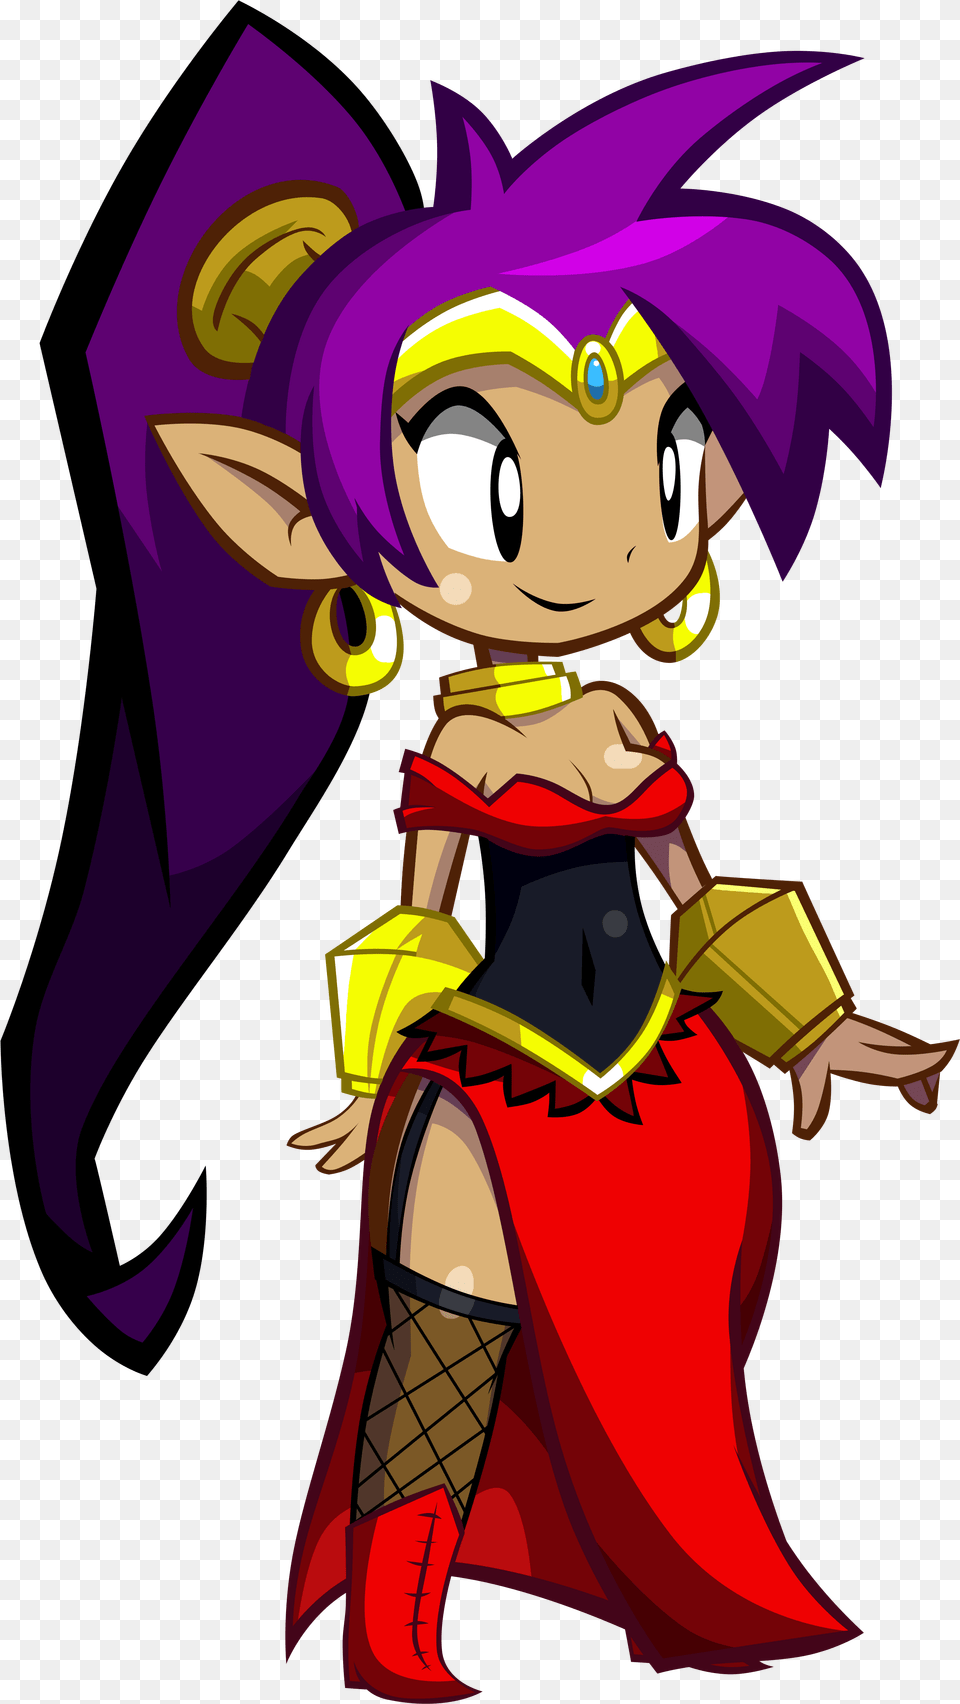 Image Result For Shantae Shantae Half Genie Hero Fan Art, Book, Comics, Publication, Baby Png